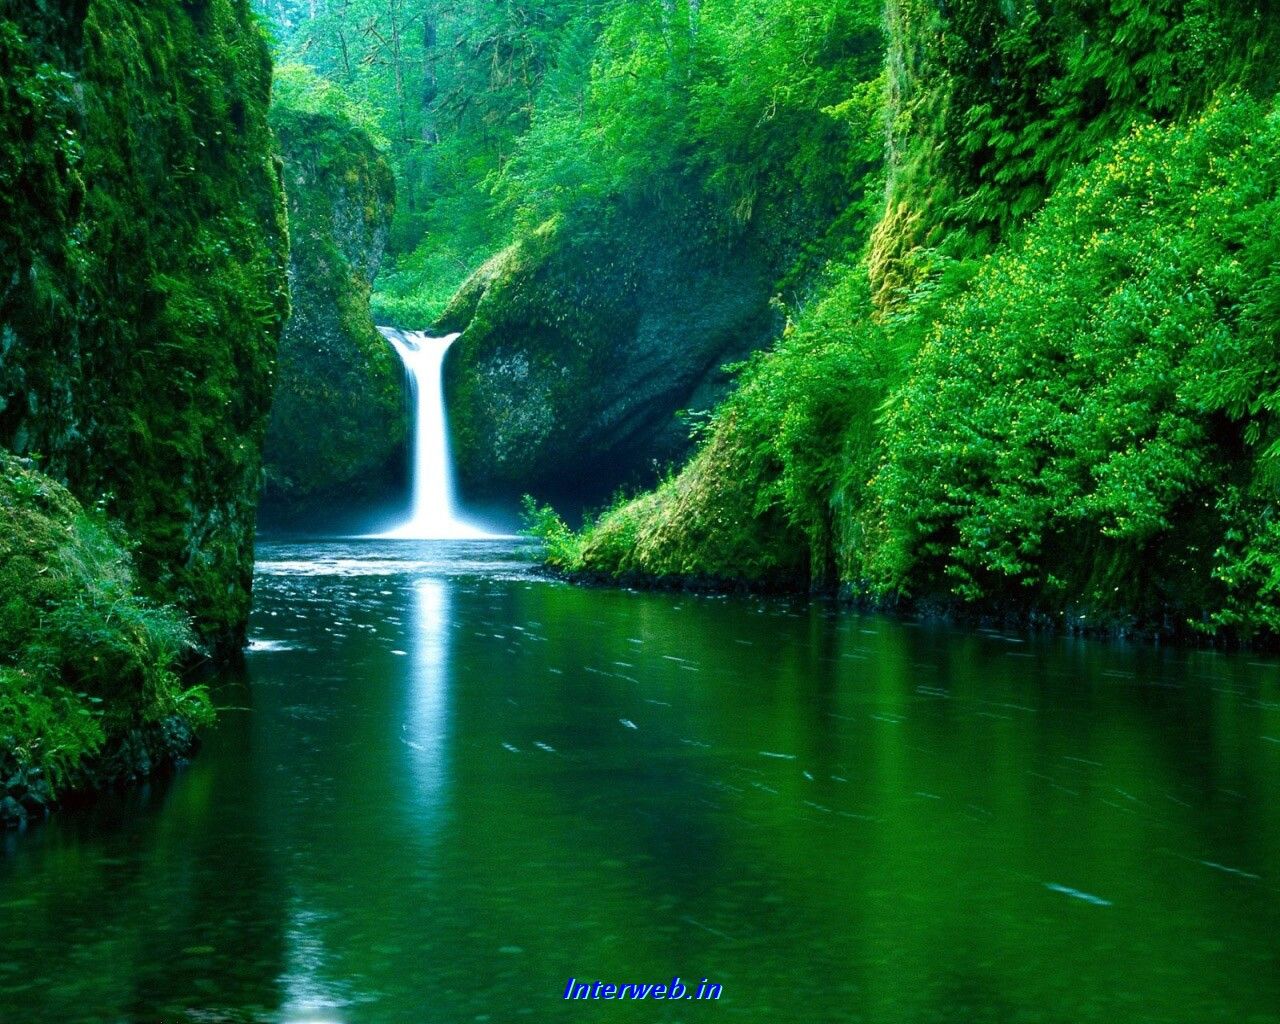 Nature Photo, wallpaper, image, Beautiful picture. Waterfall wallpaper, Waterfall, Scenery